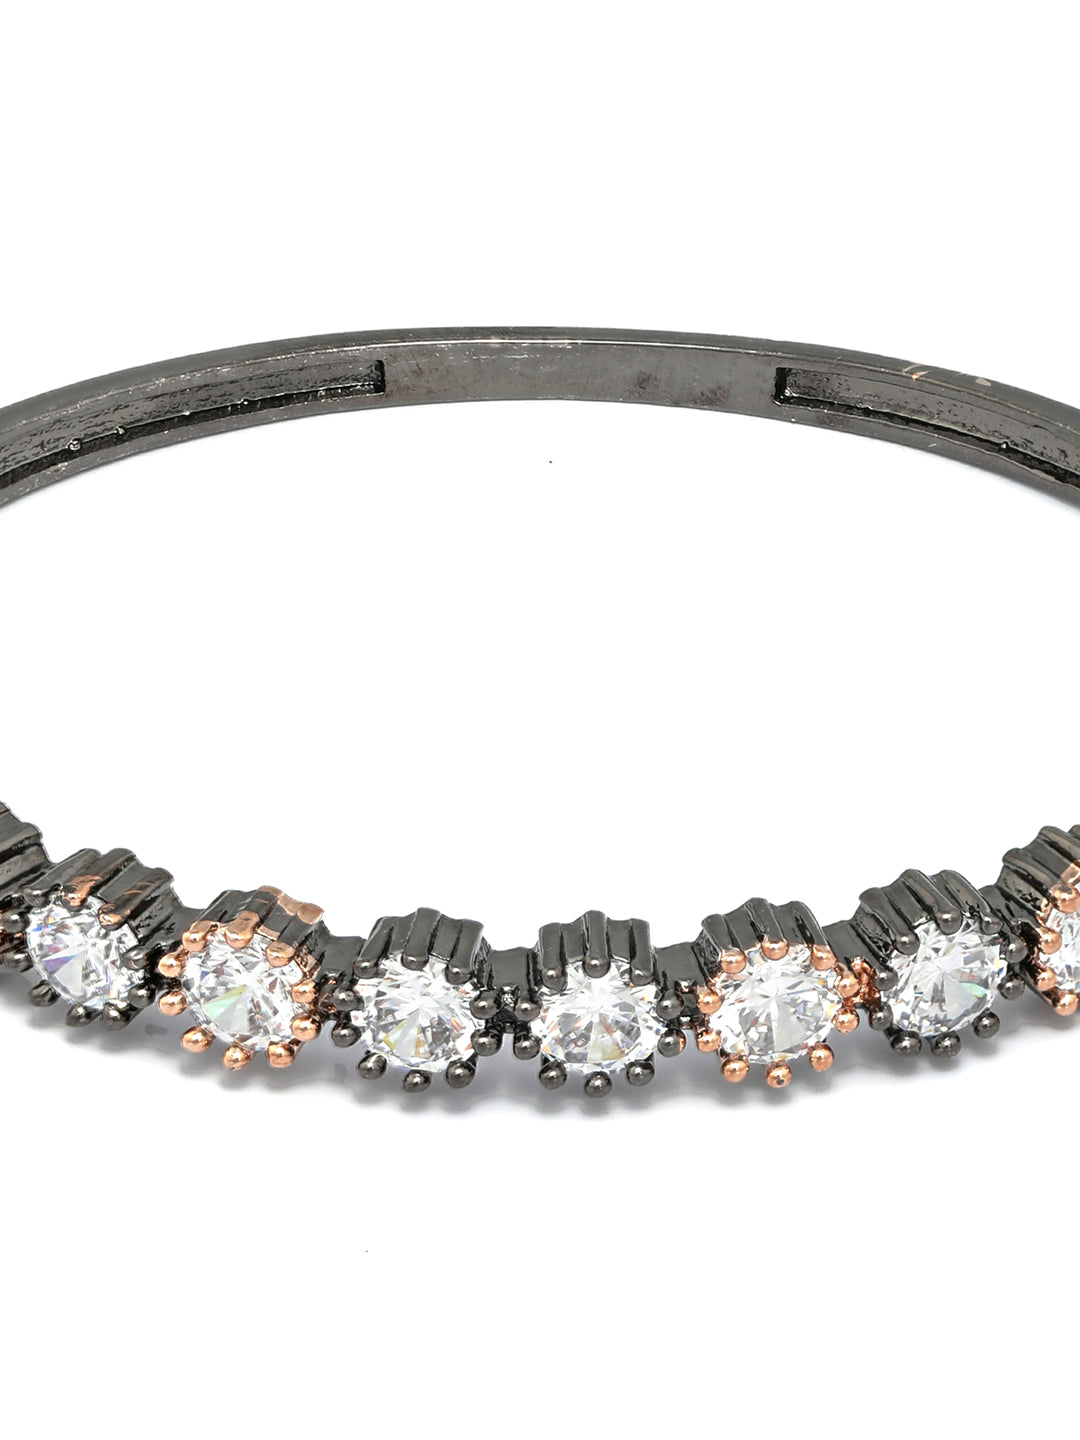 Buy D For Diamond Silver Chain Bracelet Online from SilverShine